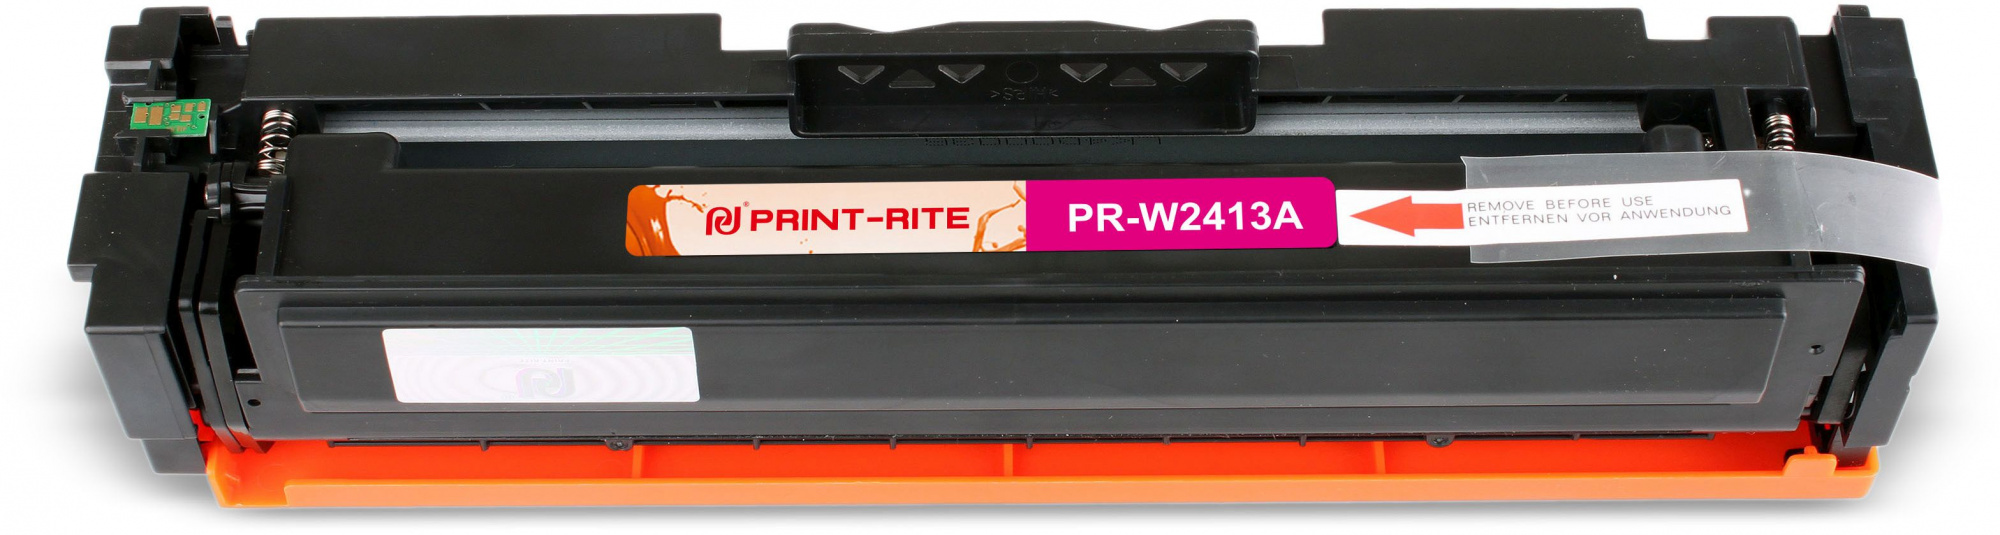   Print-Rite TFHBB7MPU1J PR-W2413A W2413A  (850.)  HP Color LJ Pro M155/MFP M182nw/M183fw